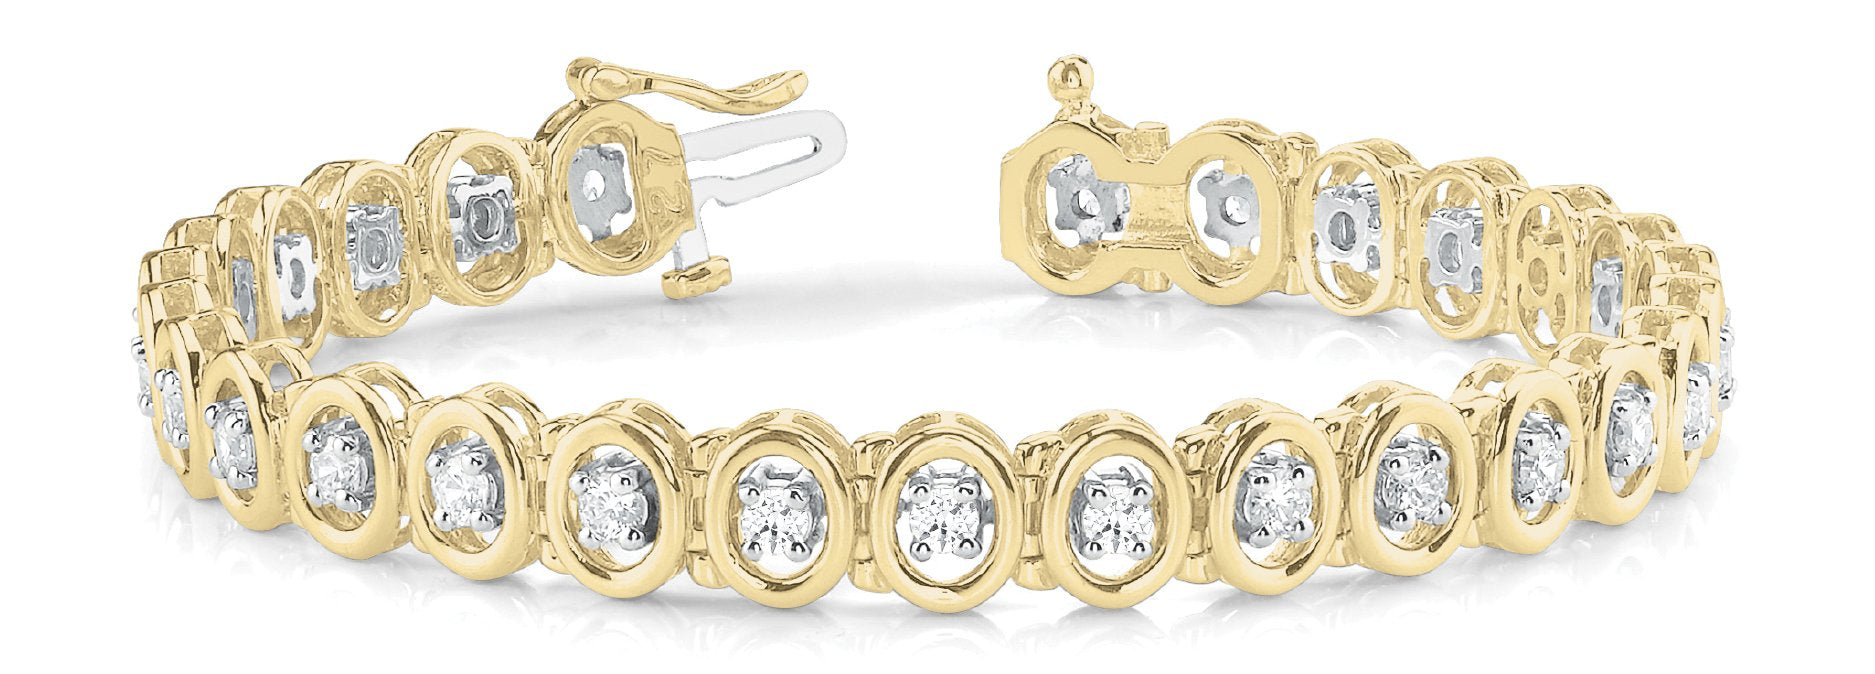 Fancy Diamond Bracelet Ladies 3.04ct tw - 14kt Yellow Gold